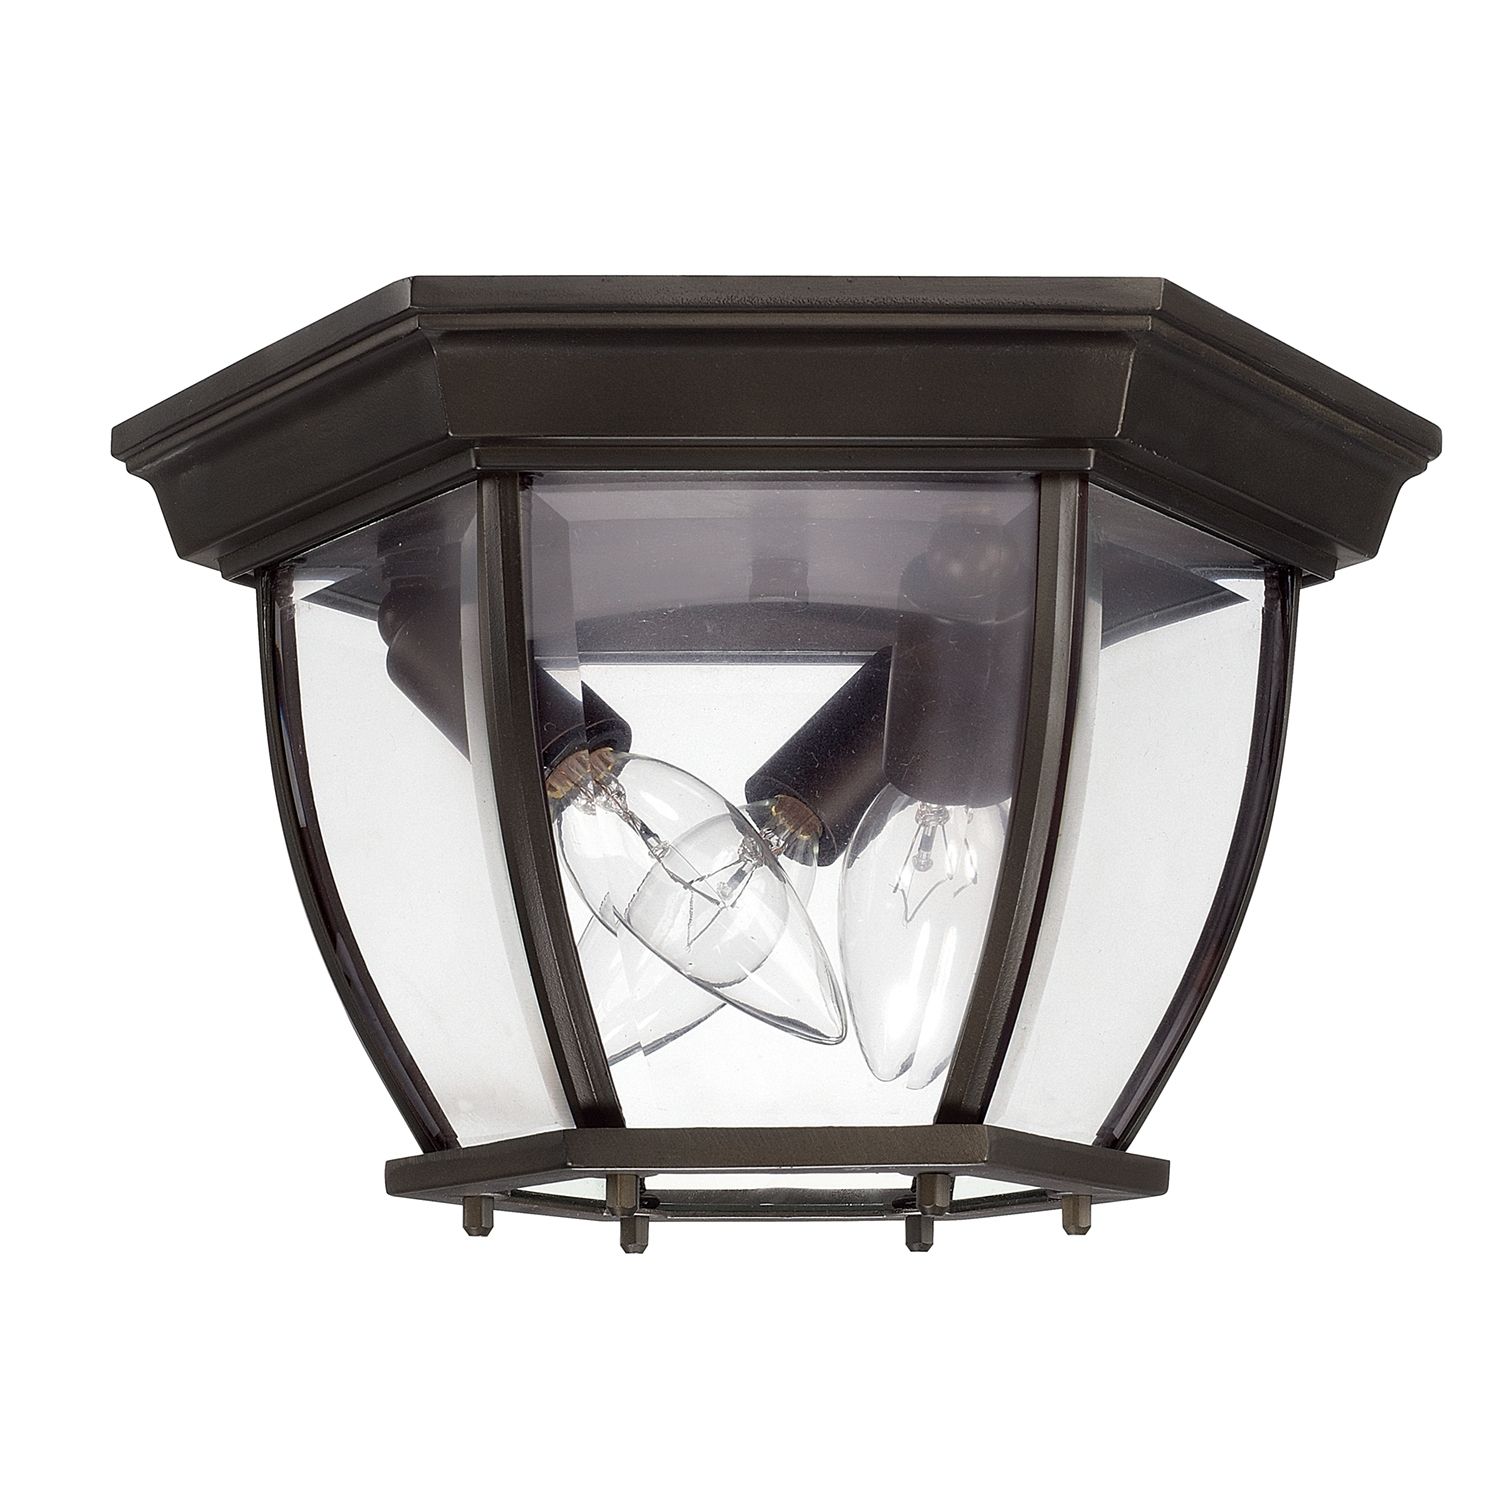 3 Lamp Outdoor Ceiling Fixture | Capital Lighting Fixture Company Pertaining To Copper Outdoor Ceiling Lights (View 10 of 15)